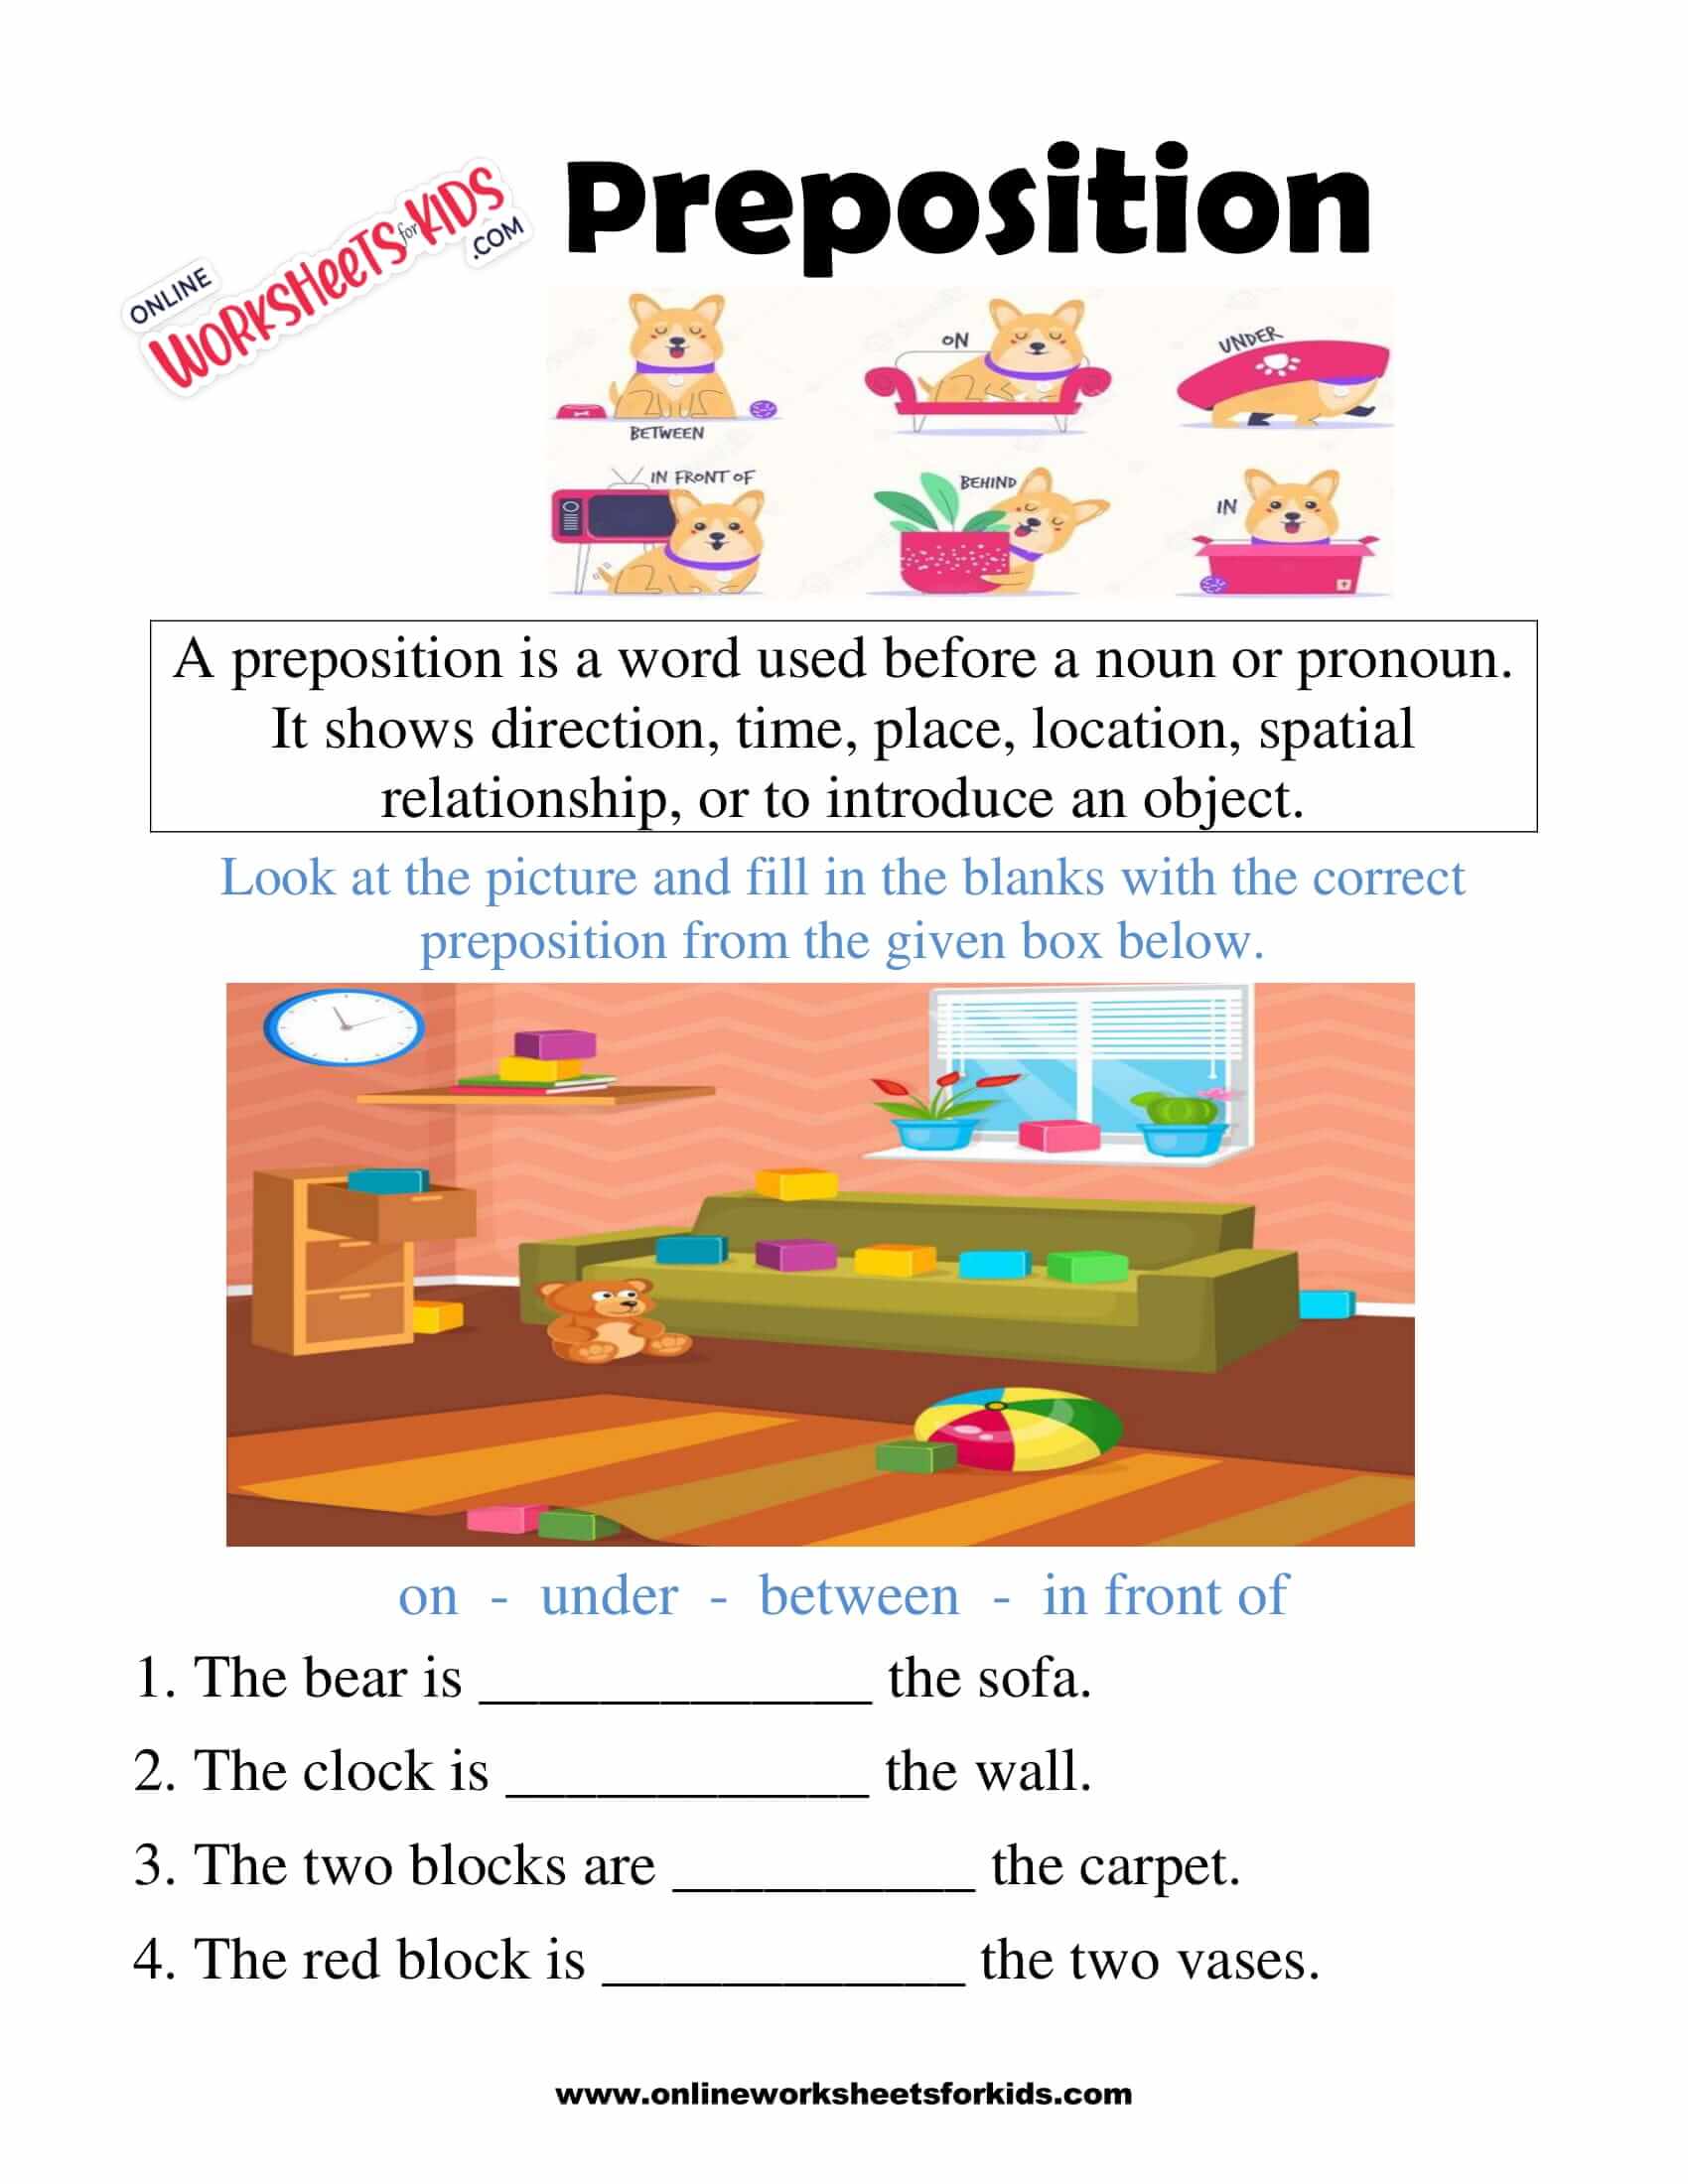 preposition-worksheets-for-grade-1-3